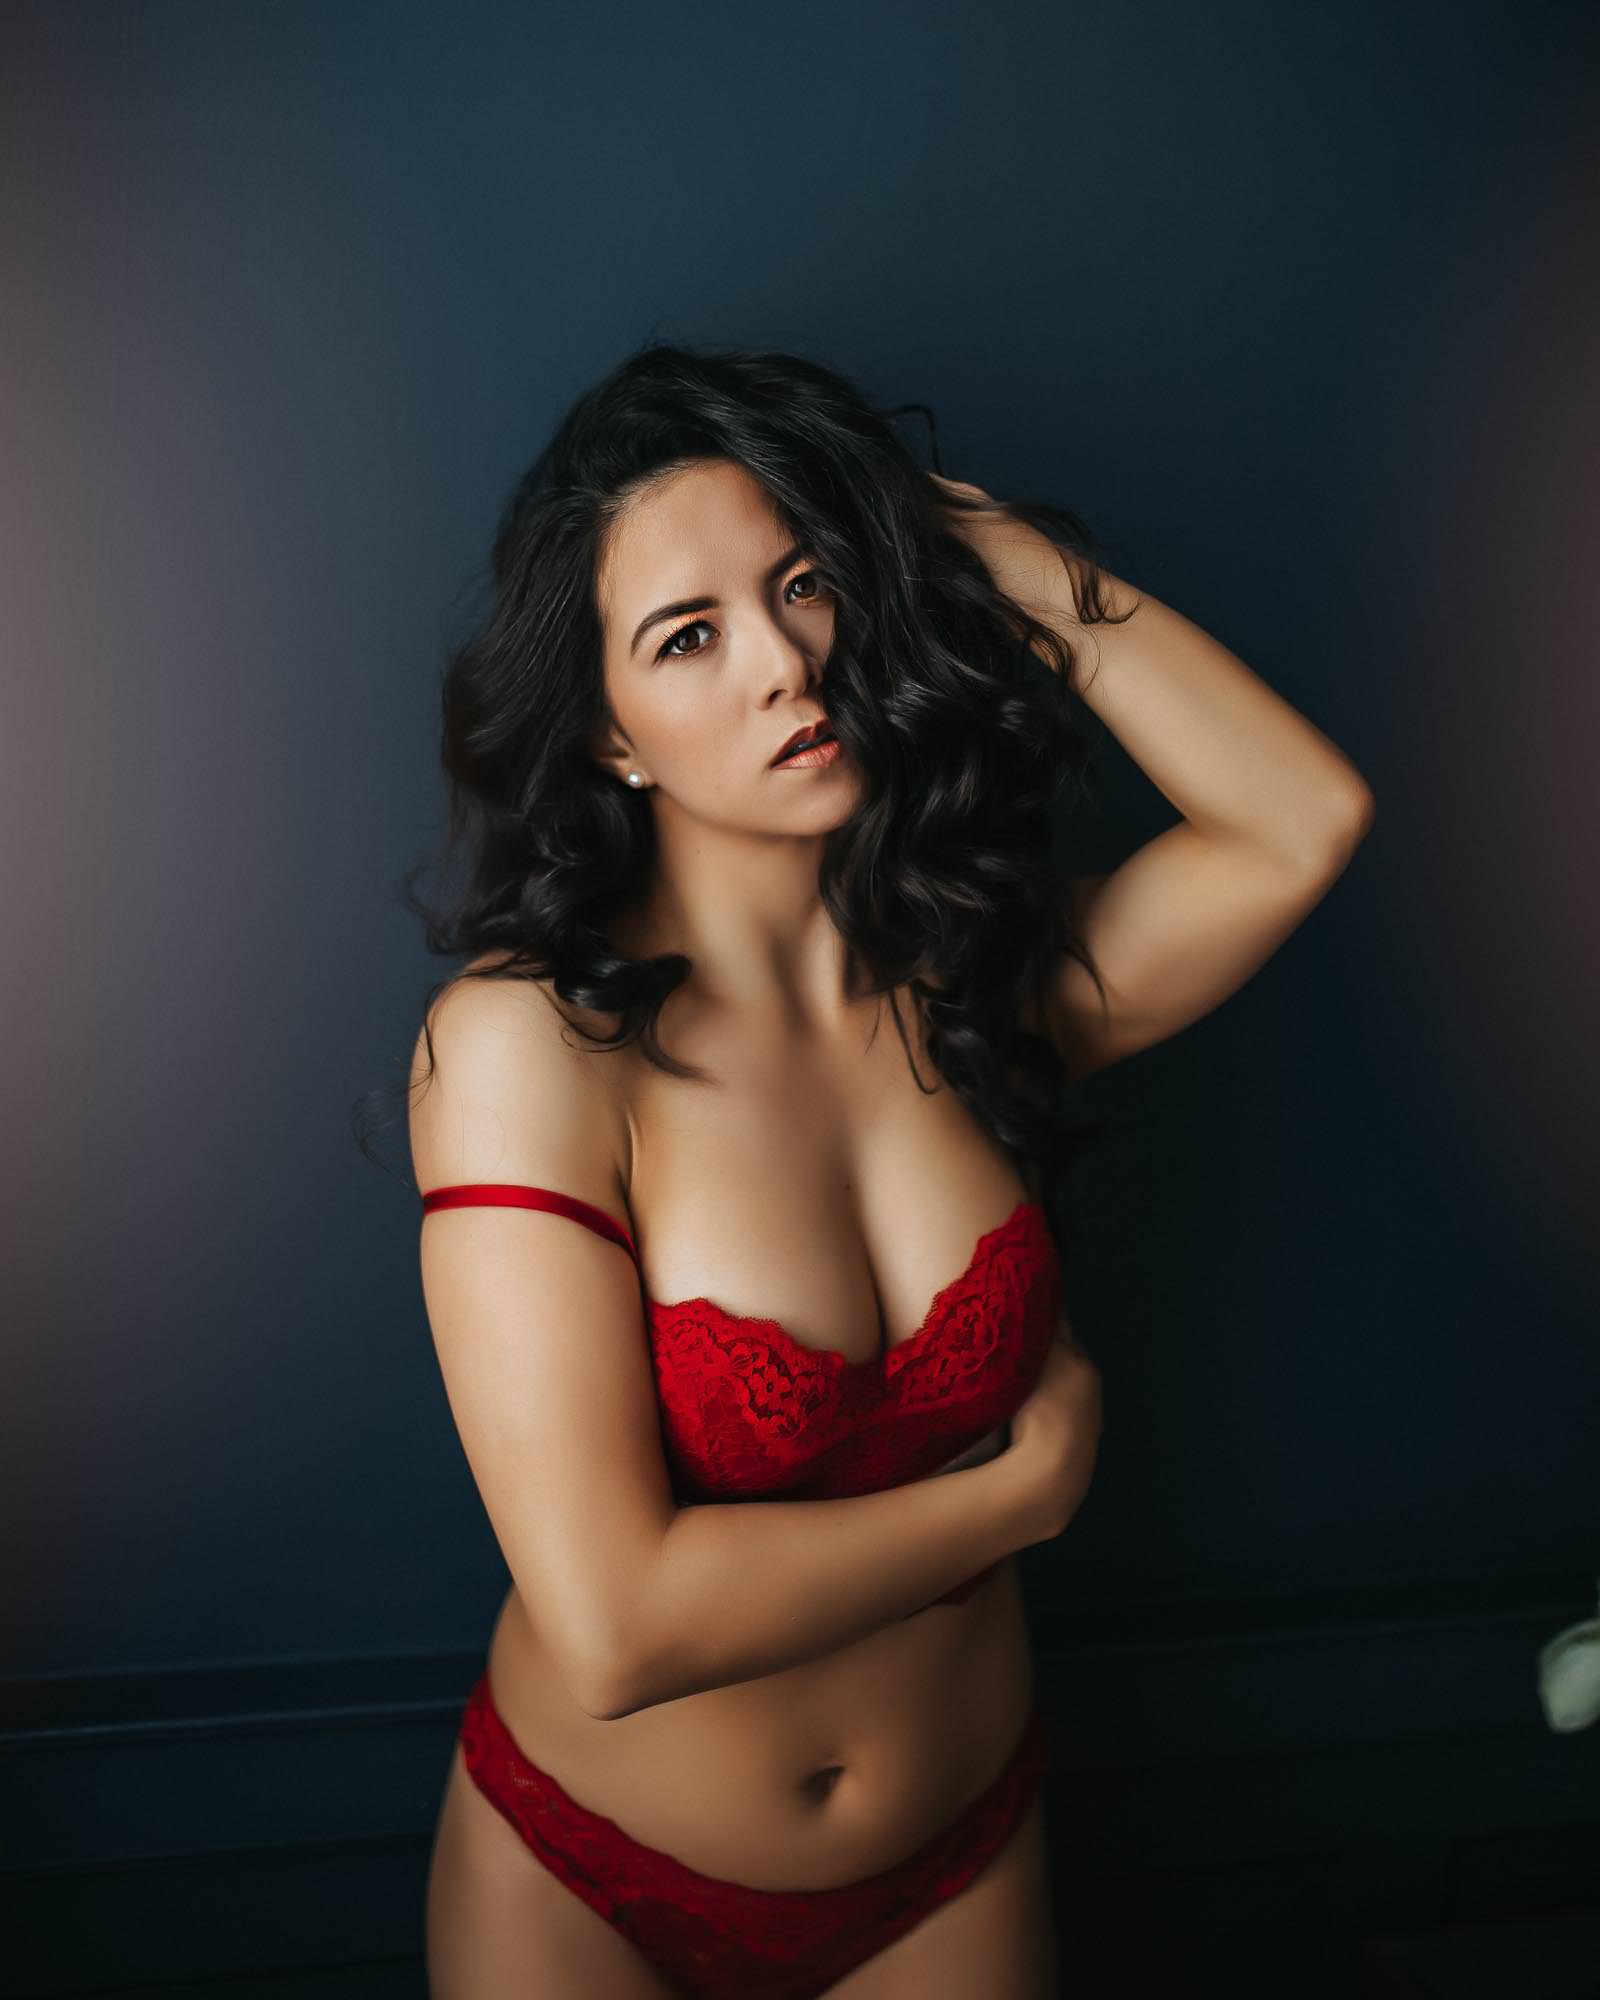 Boudoir studio photoshoot of a woman wearing red undergarments.